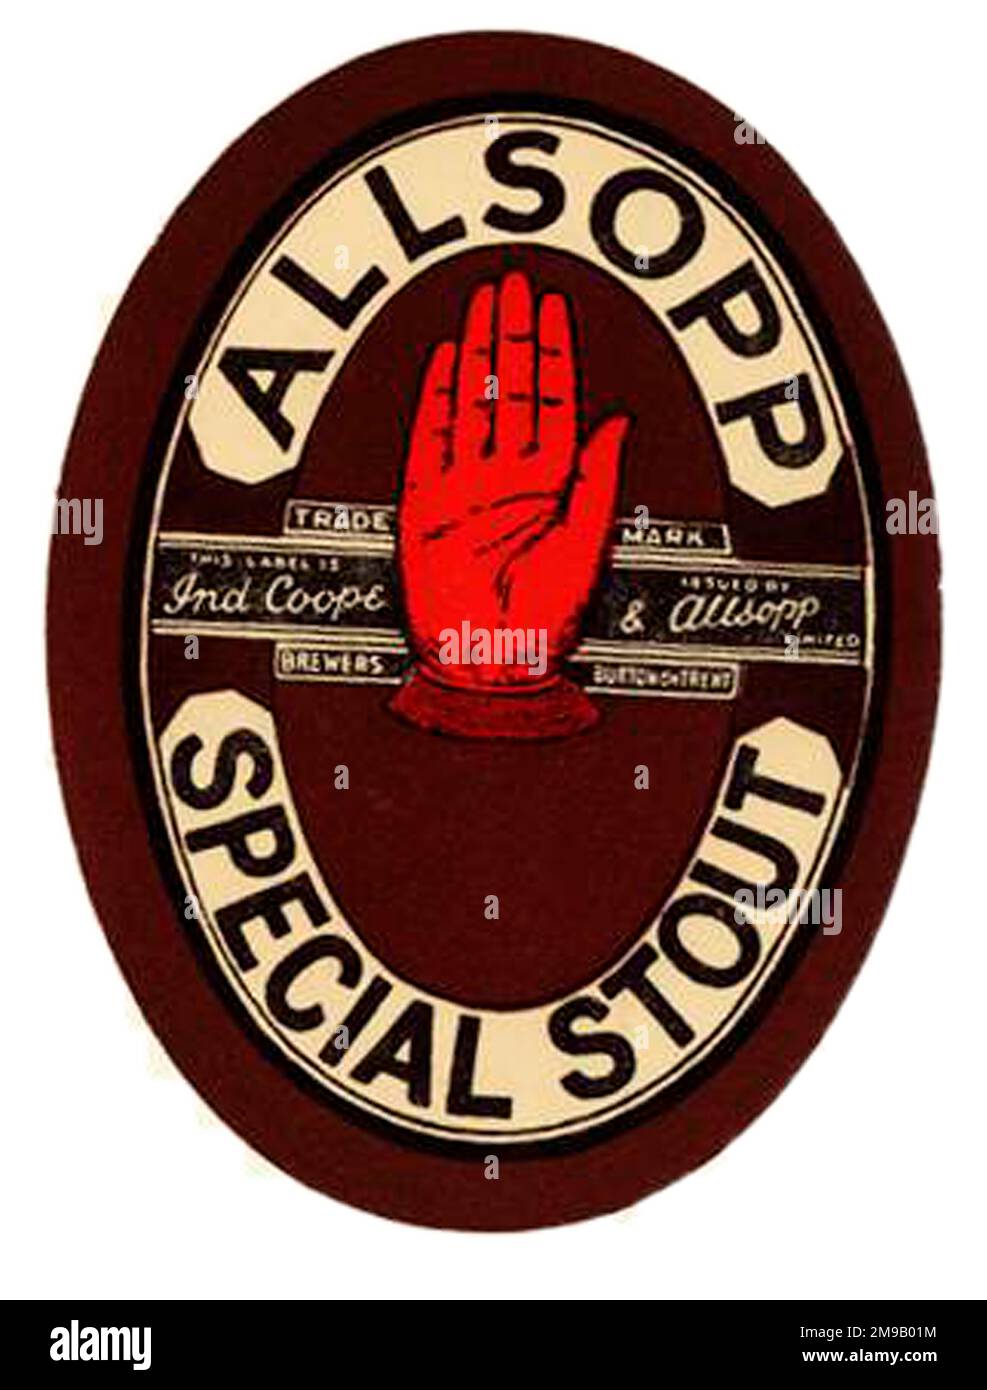 Allsopp Special Stout Stock Photo